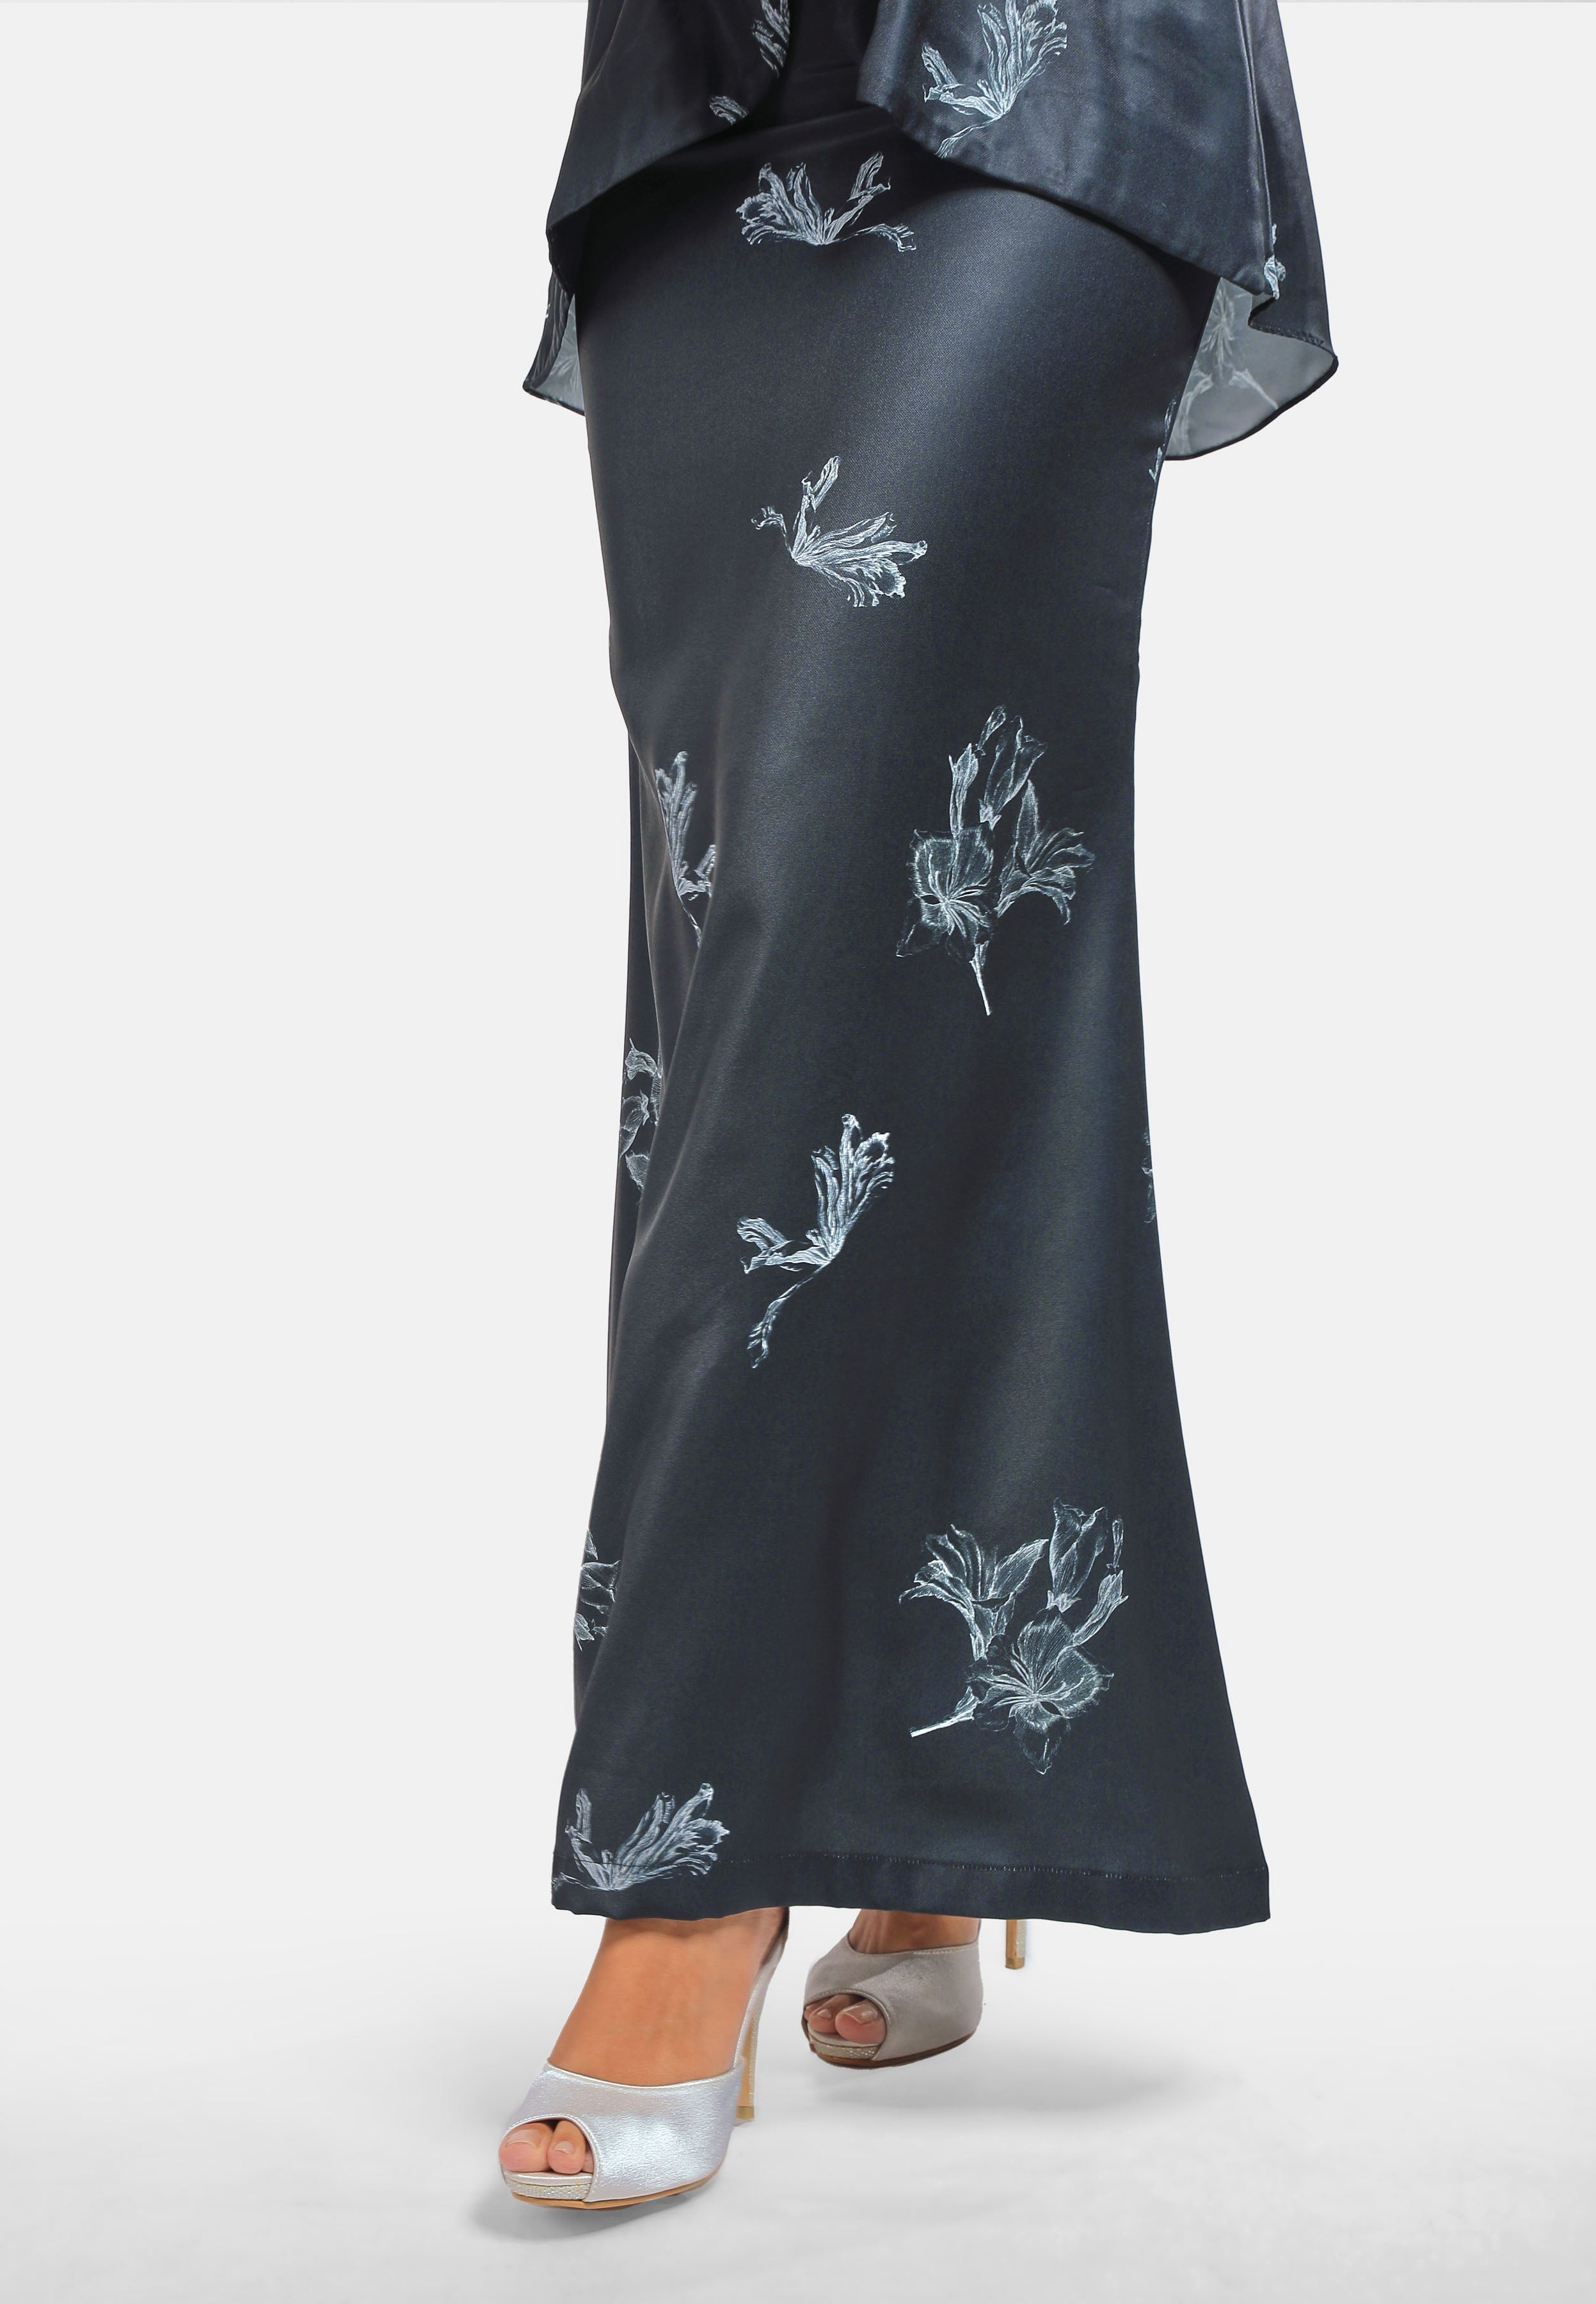 Arissa Toile Prints Baju Kurung Set - Iris in Jet Black (ARS-18022) (MD2)